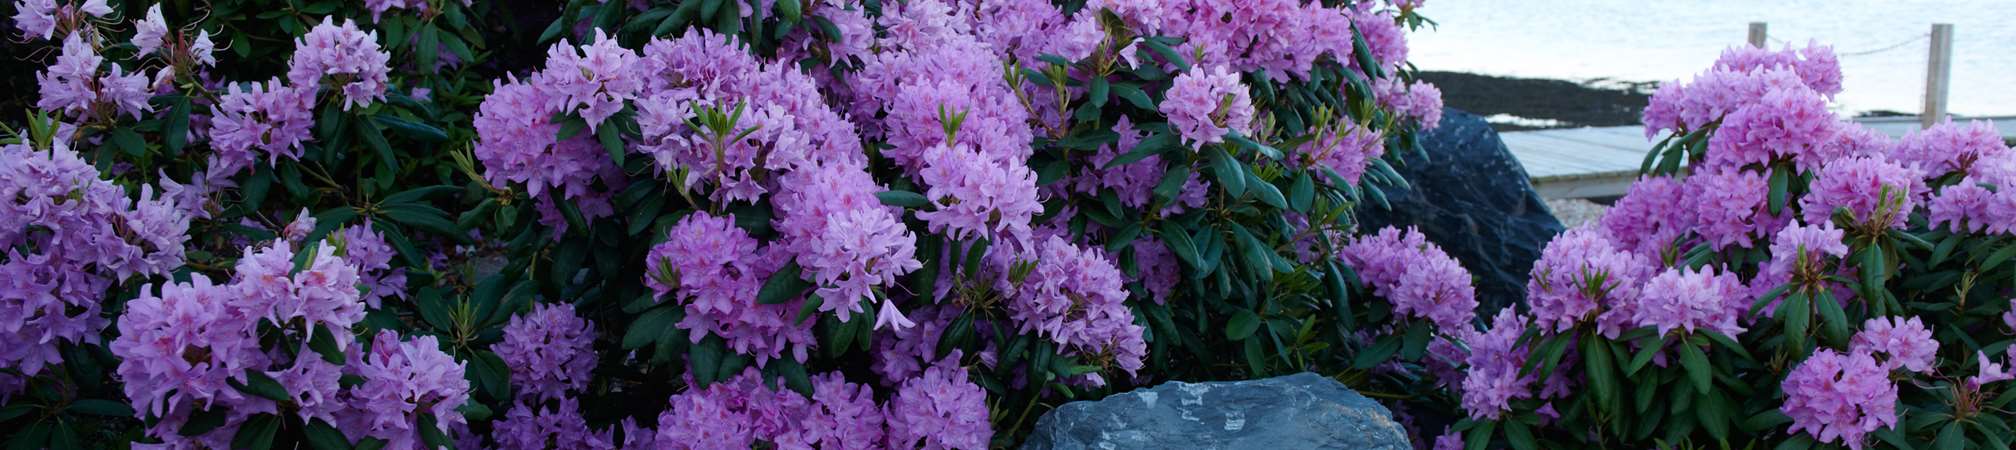 Violette rhododendron ved kysten